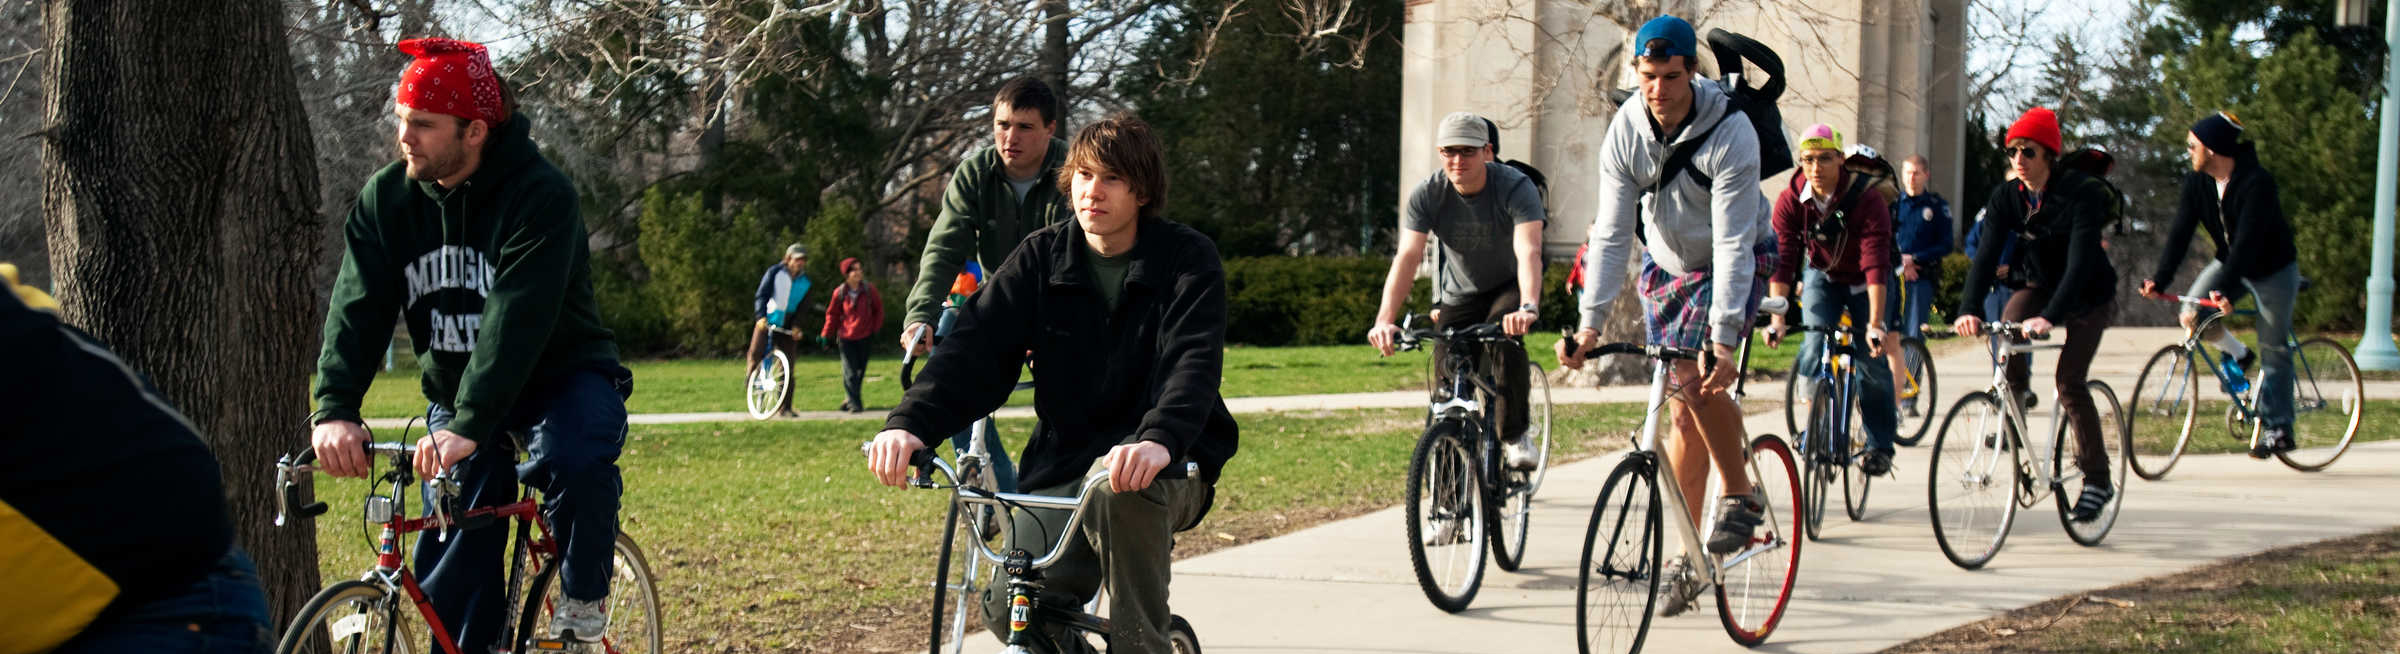 Students riding bikes along a campus path.